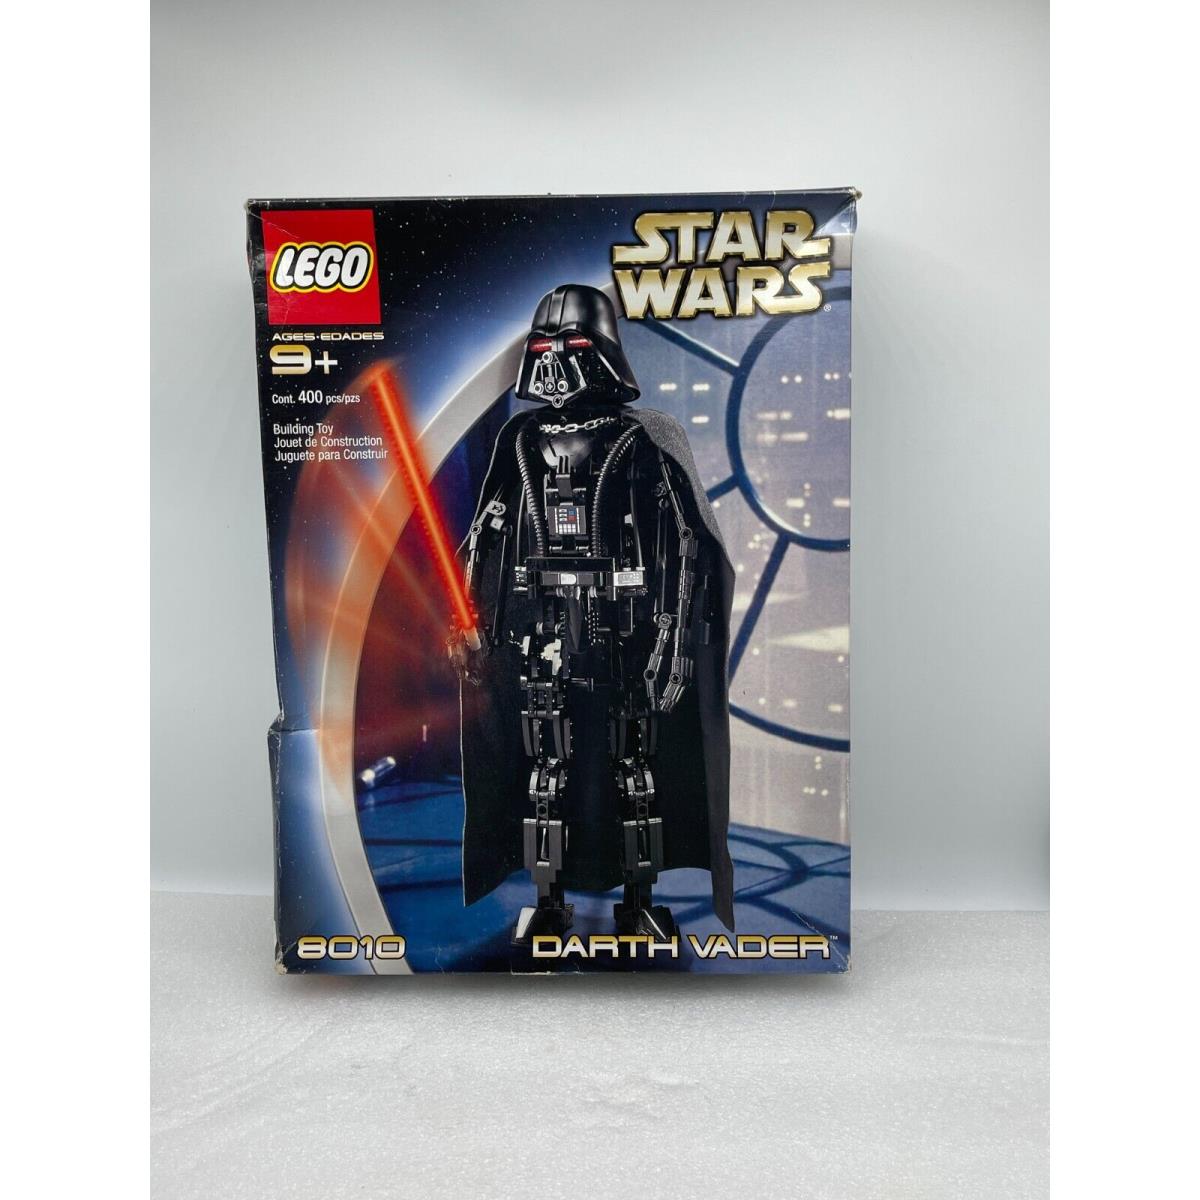 Lego Star Wars: Darth Vader 8010 Vintage